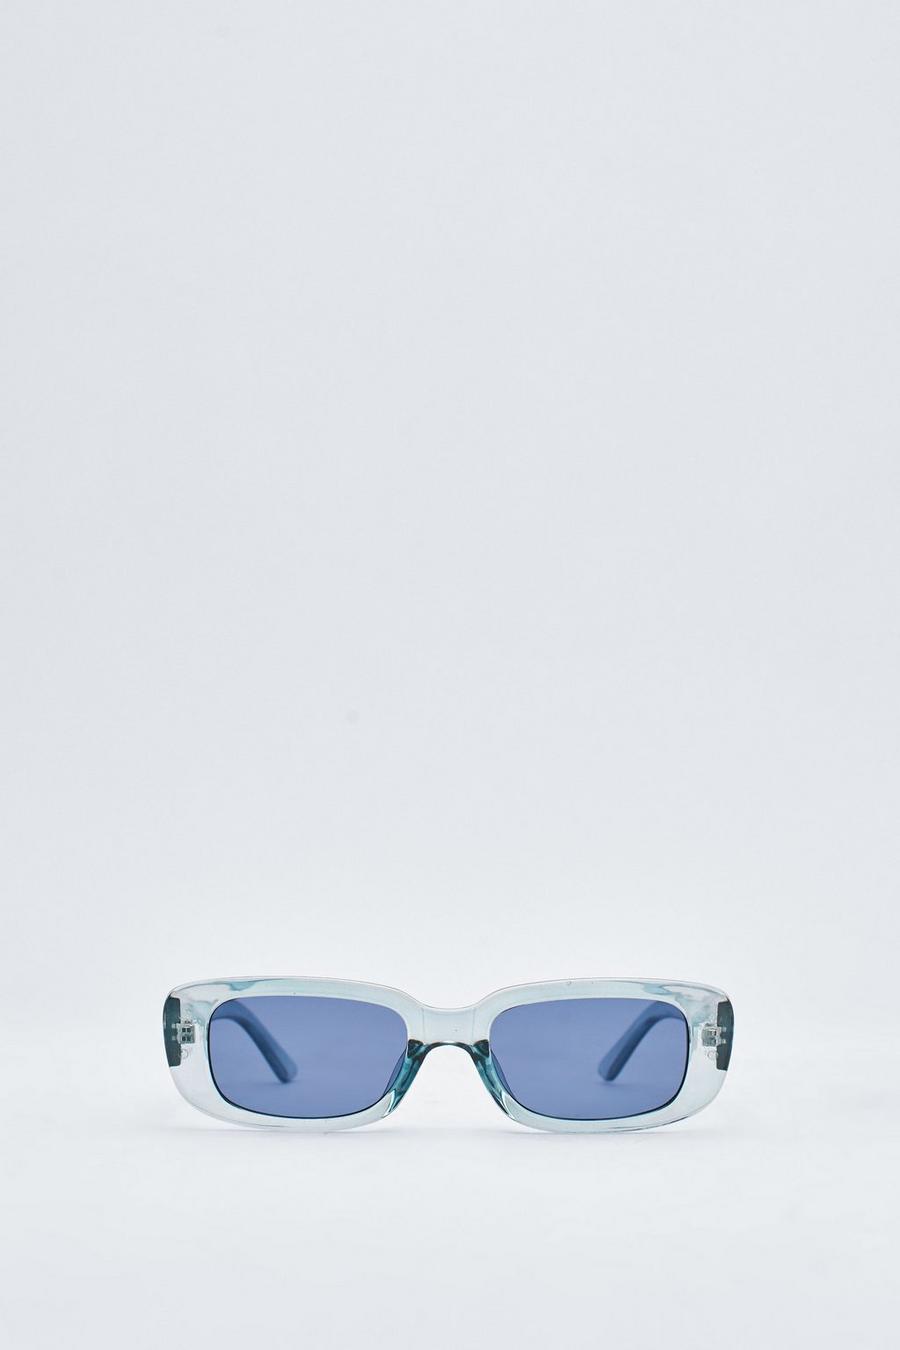 Translucent Blue Tint Lens Sunglasses